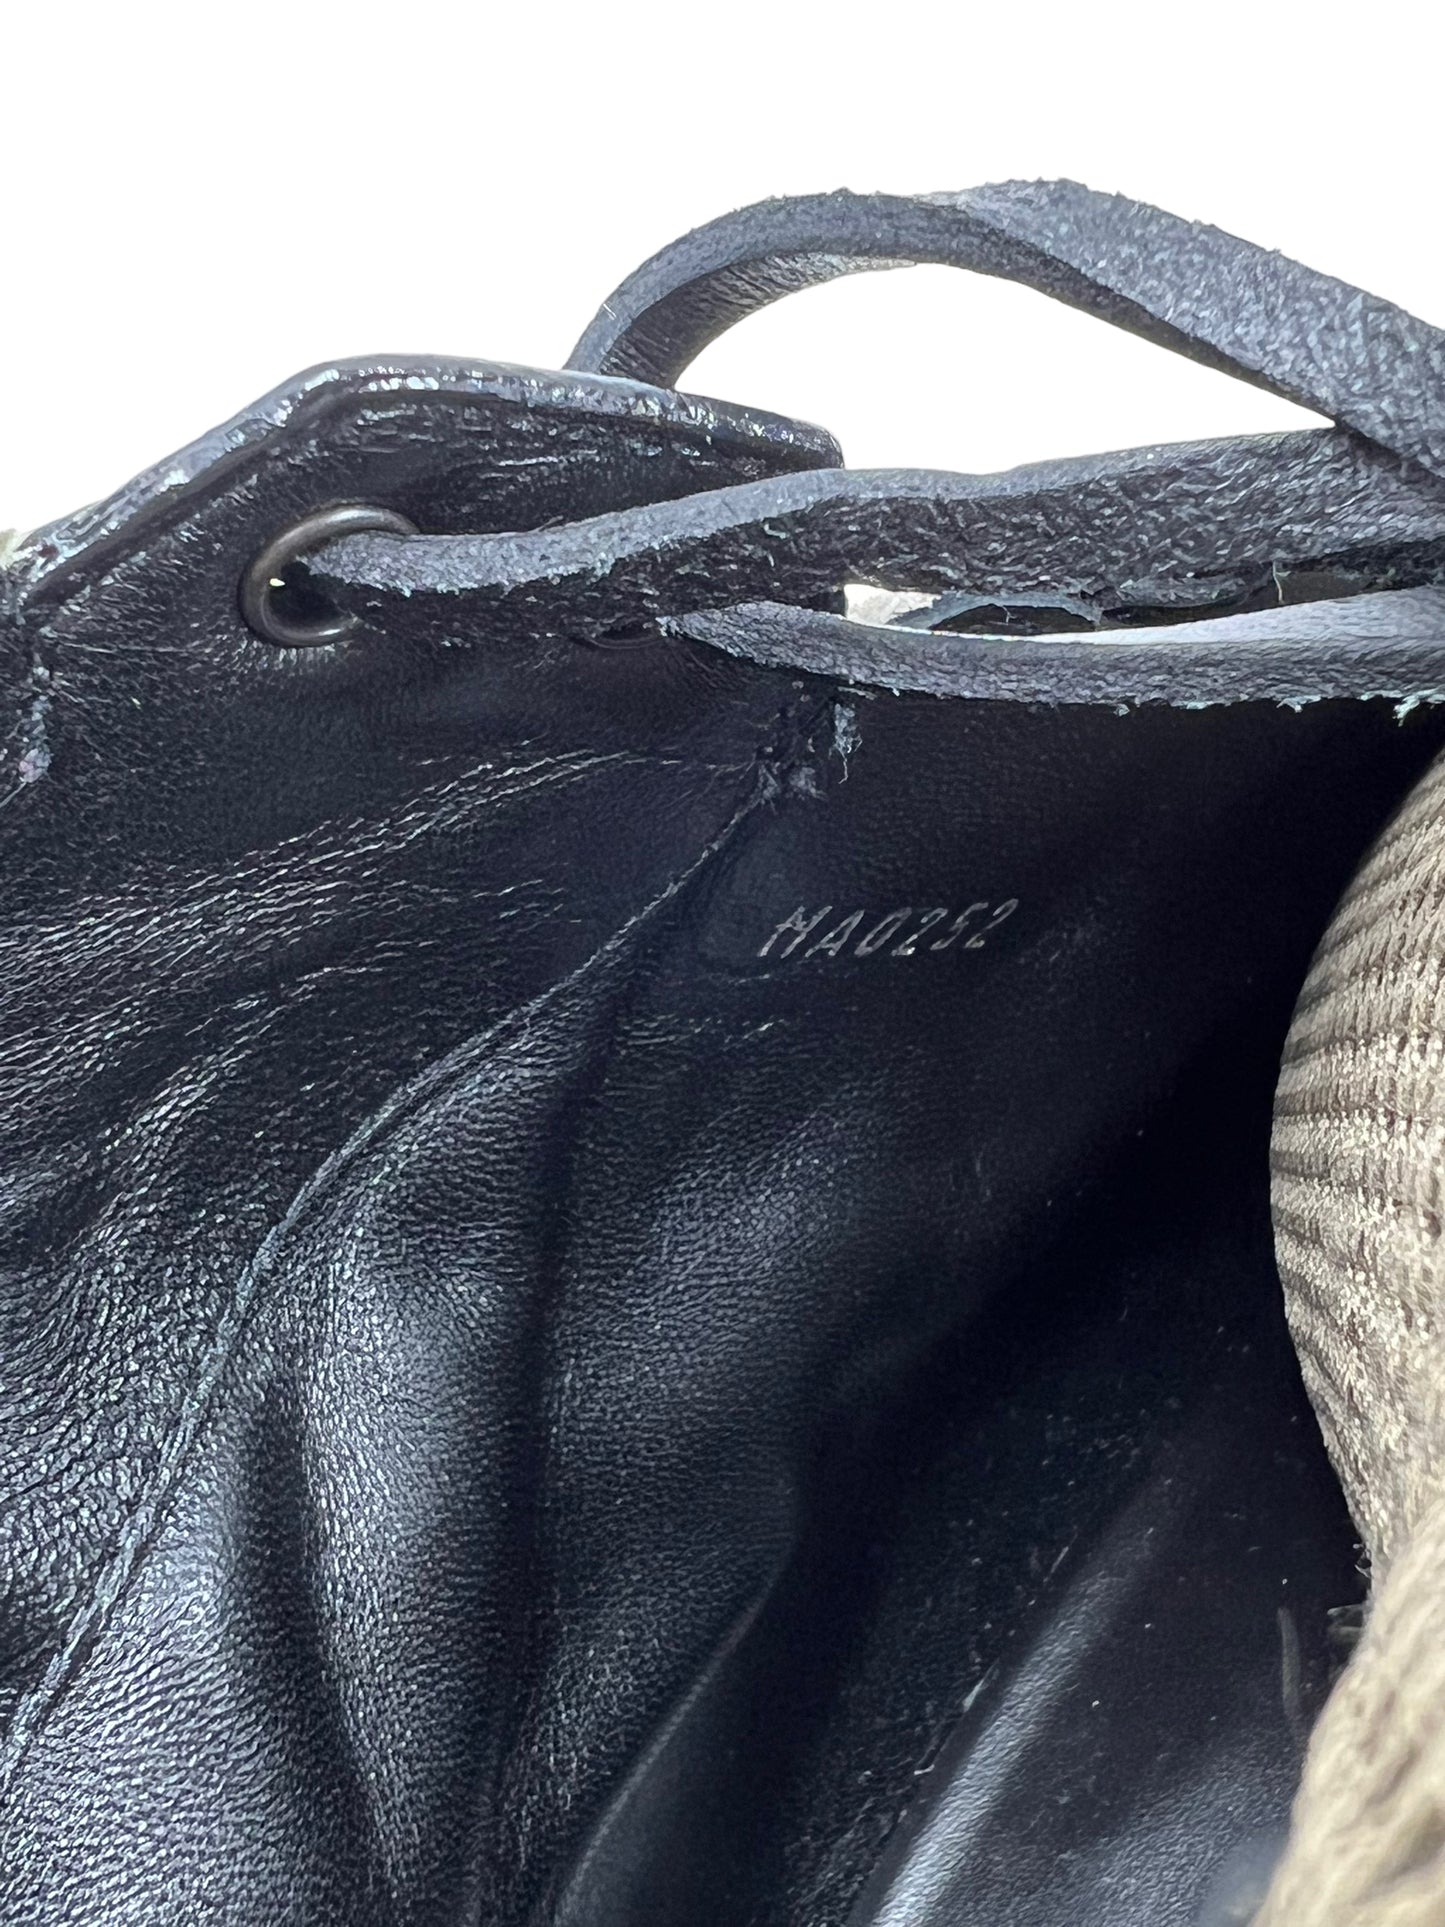 Louis Vuitton Size 40 Suede Calfskin Star Trail Boots